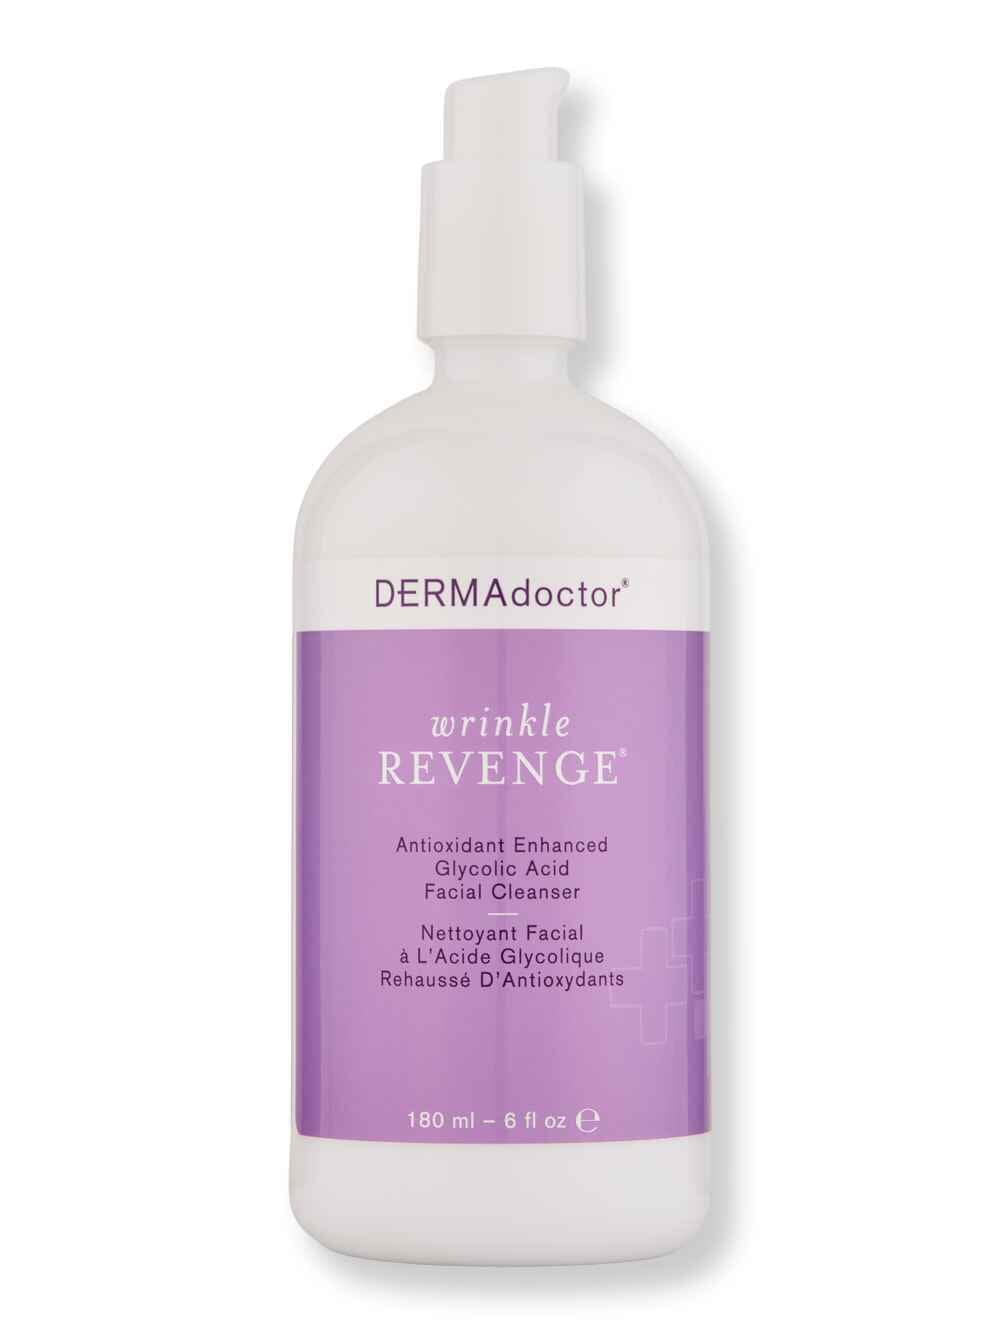 DermaDoctor DermaDoctor Wrinkle Revenge Antioxidant Enhanced Glycolic Acid Facial Cleanser 6 oz180 ml Face Cleansers 